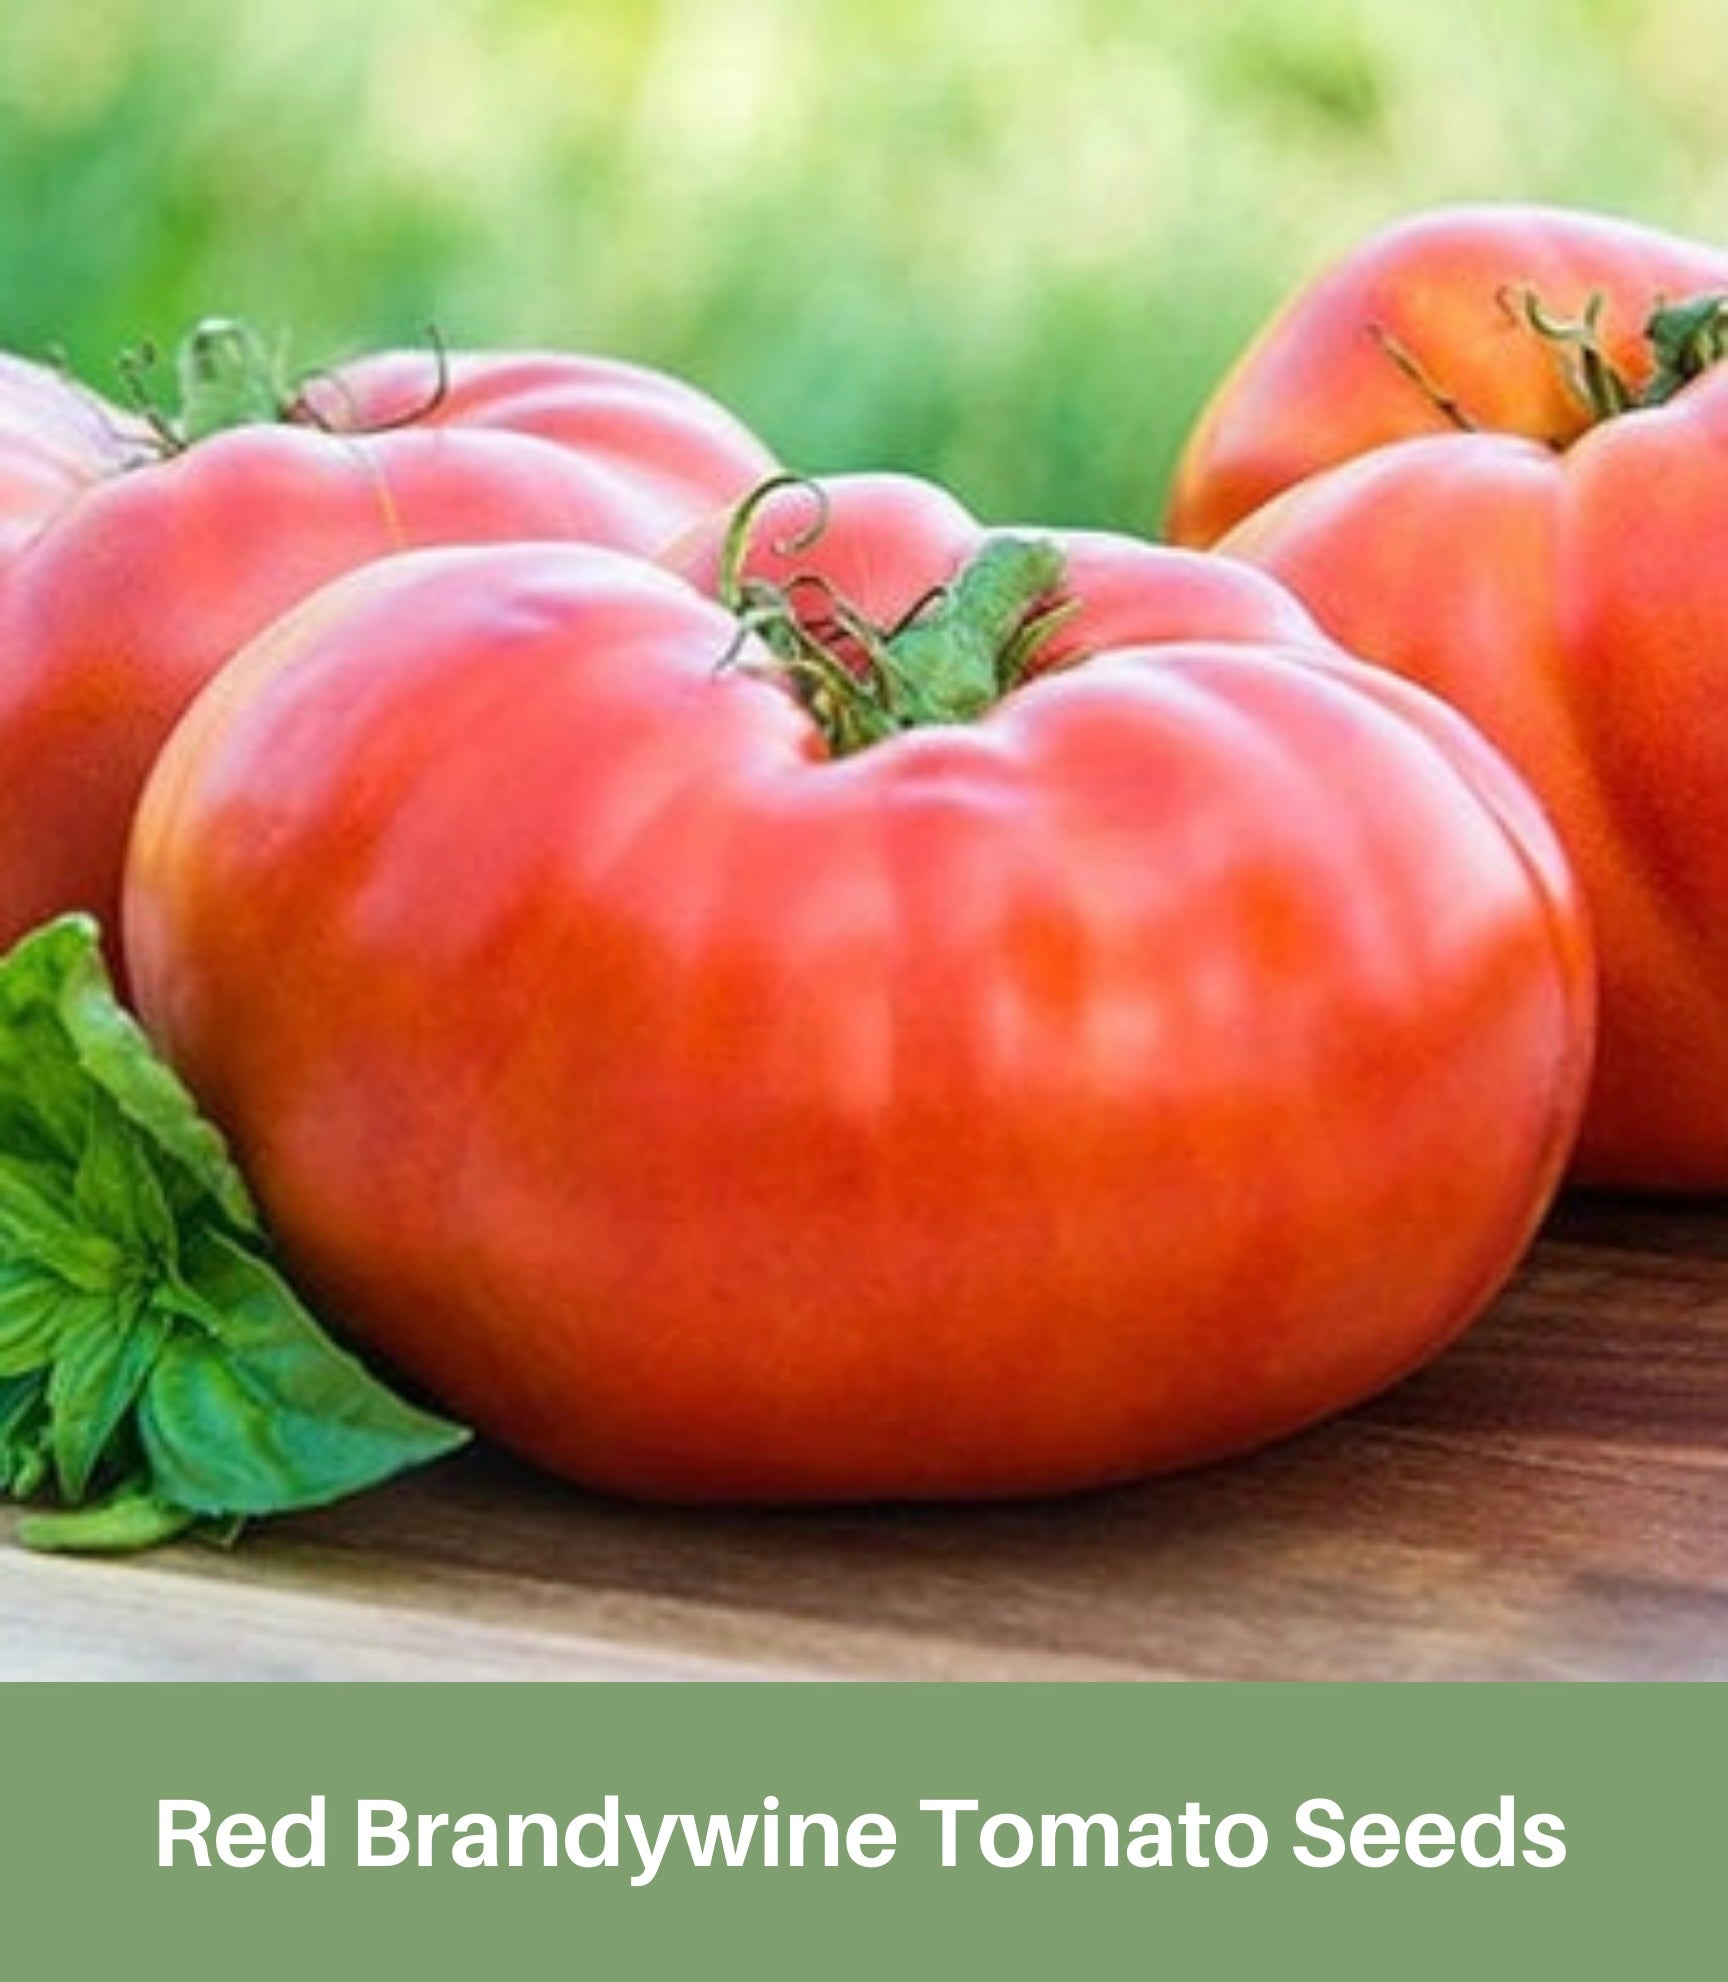 Black Brandywine Tomato Seeds